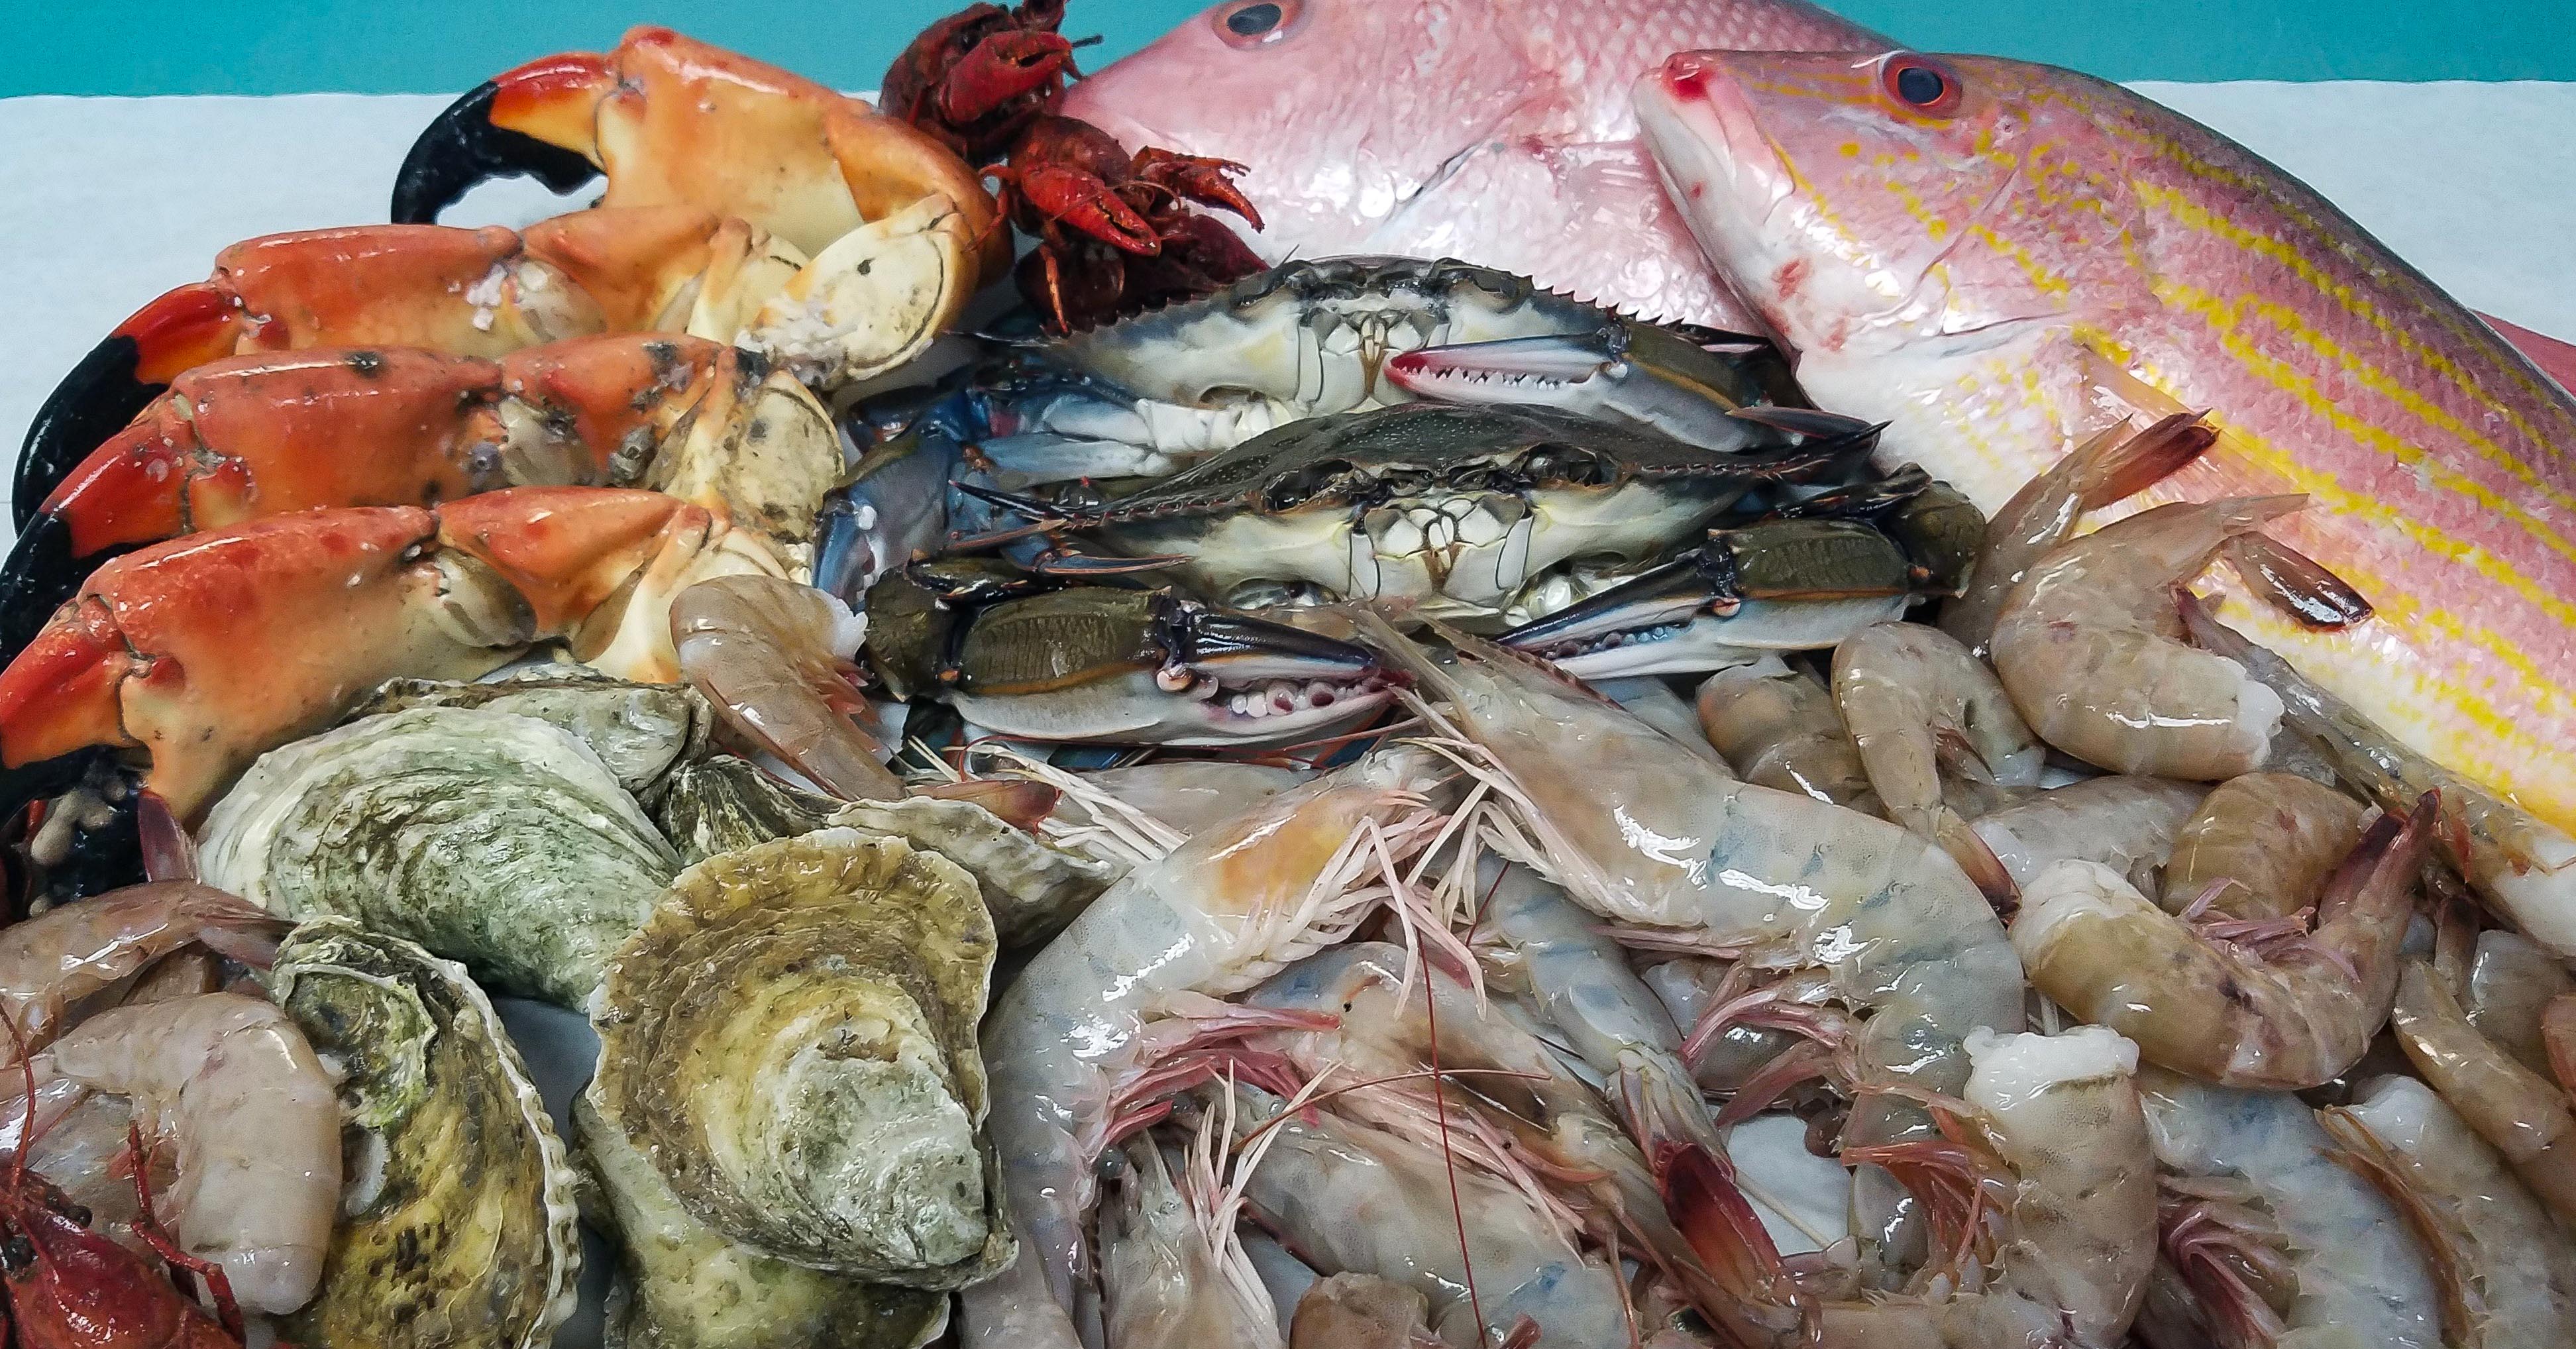 Southern Seafood Market - Fresh Fish - Shrimp - Crabs Tallahassee FL.